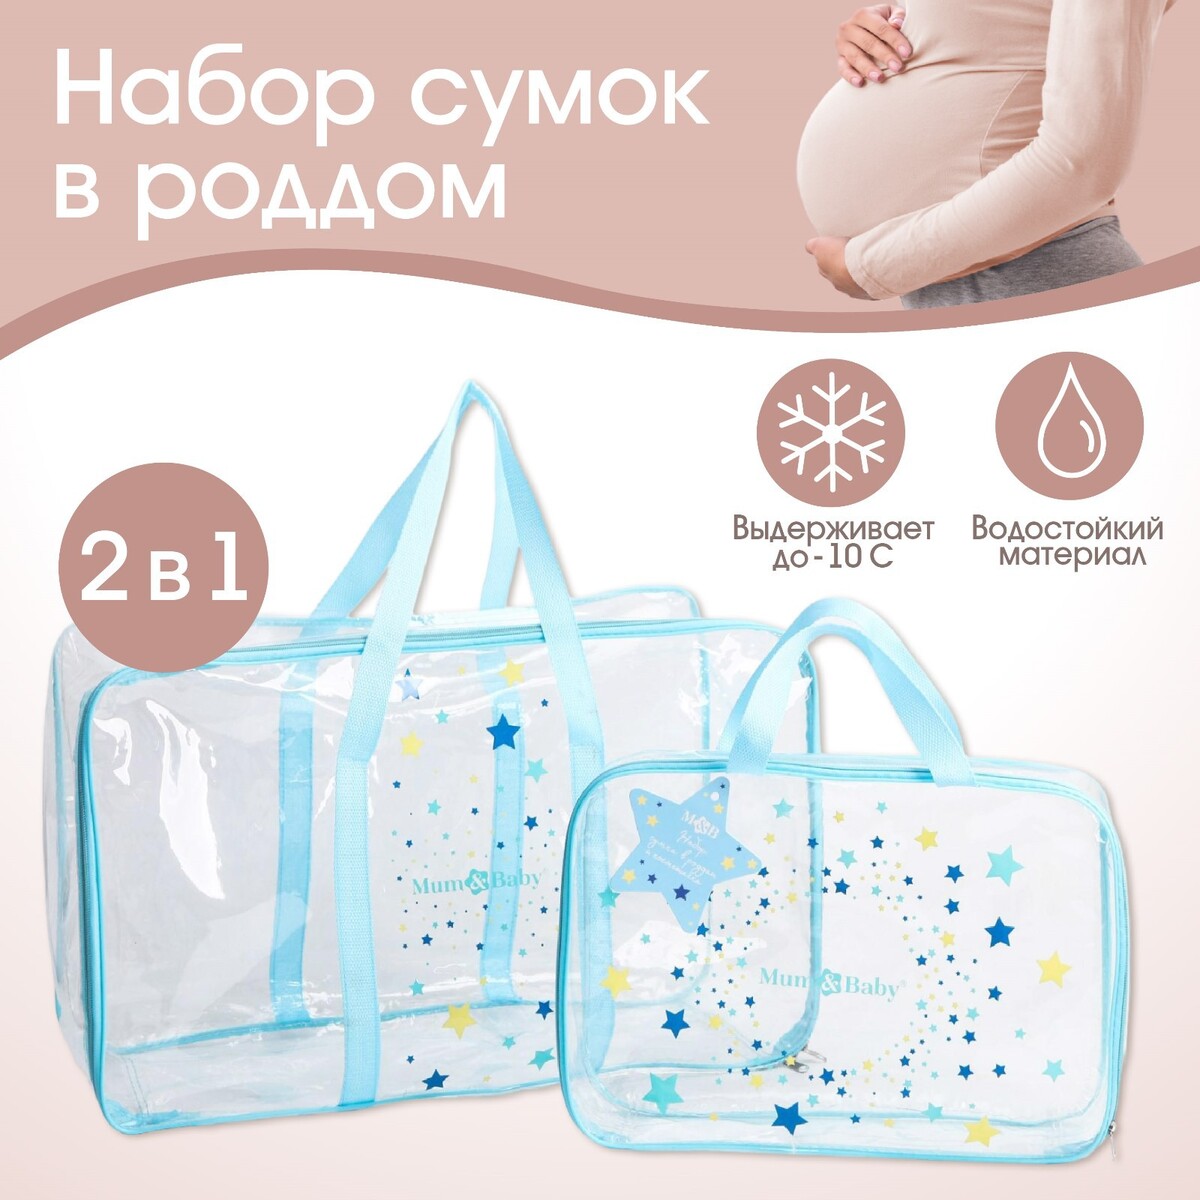 Набор сумка в роддом и косметичка косметичка из прозрачного pvc